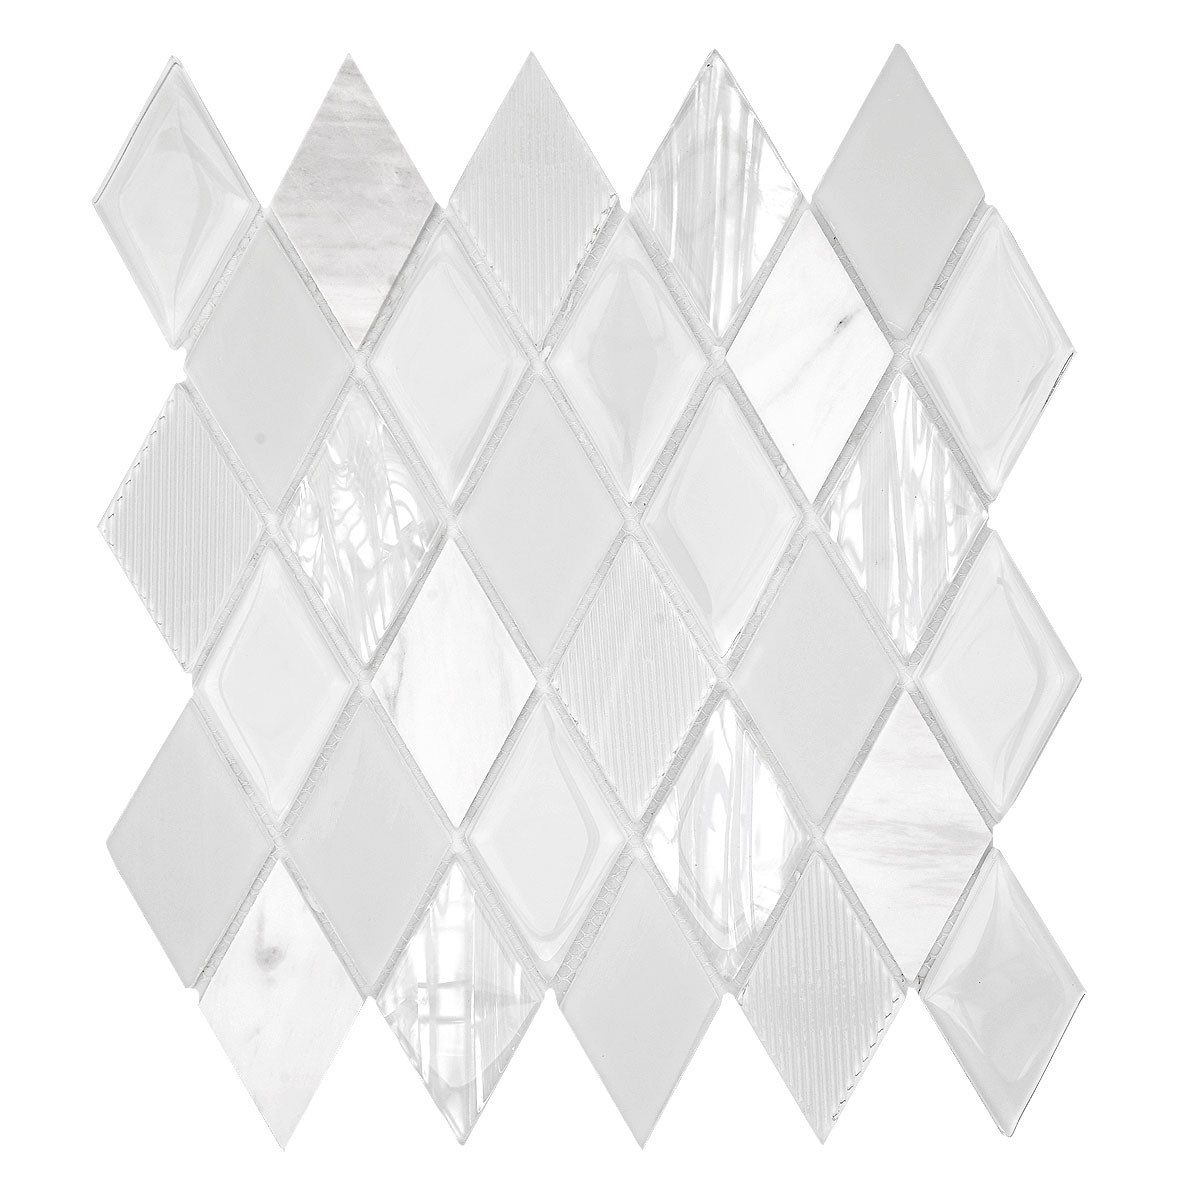 Elegant White Glass Marble Kitchen Backsplash Tile. Luxury look for White & Gray Kitchen Design Projects